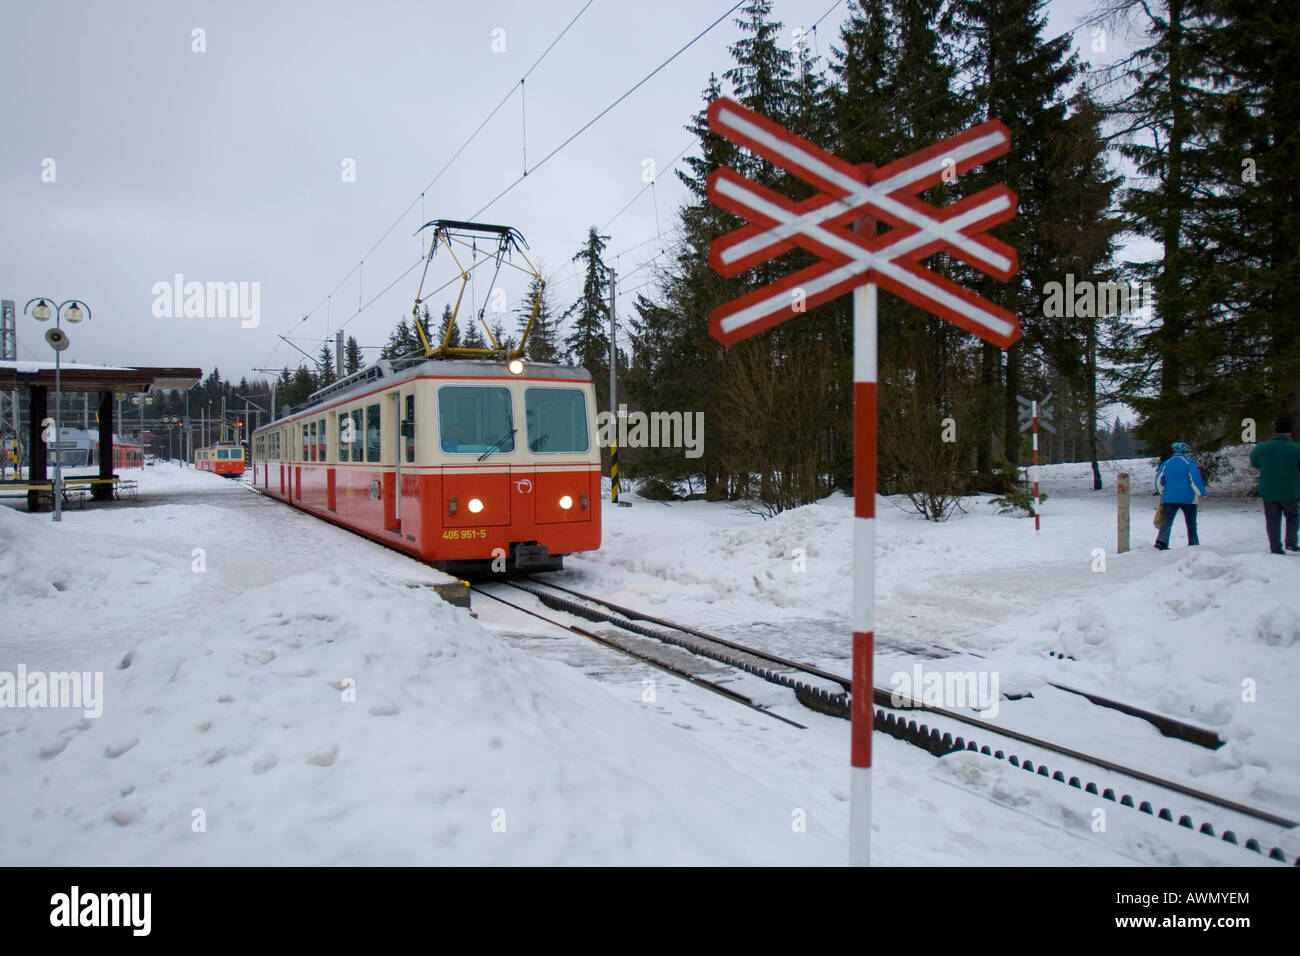 Tatra Electric Railway in the snow, Strbske Pleso, Slovakia, Europe Stock Photo